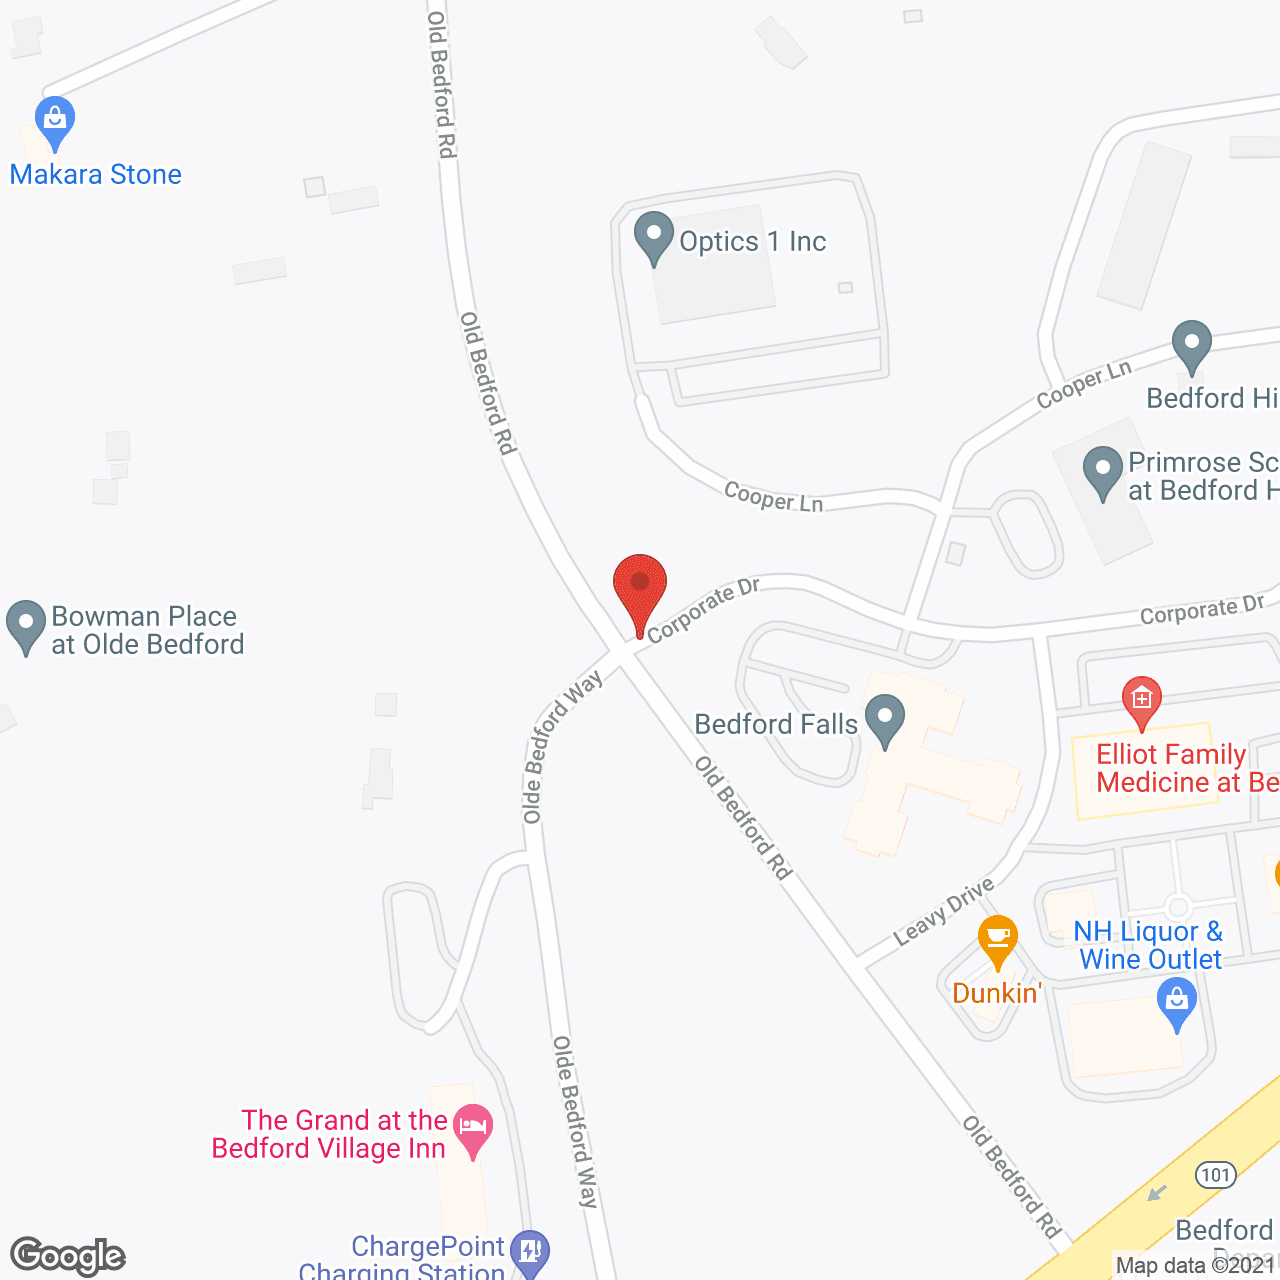 Benchmark at Bedford Falls in google map